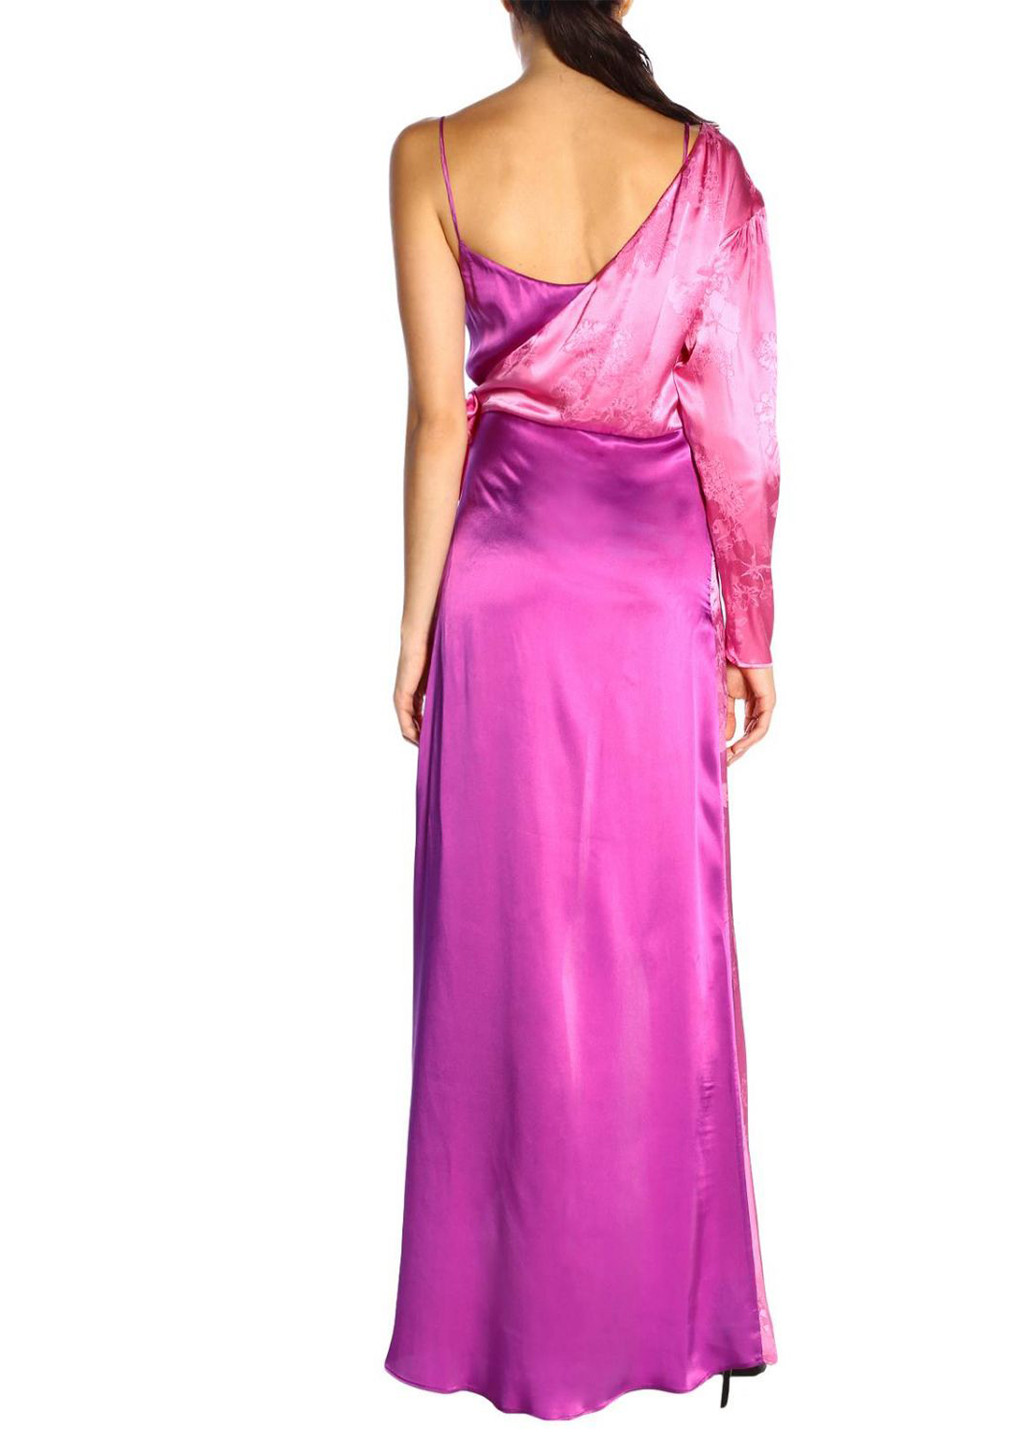 Фуксиновое (цвета Фуксия) вечернее платье на одно плечо, на запах Pinko однотонное